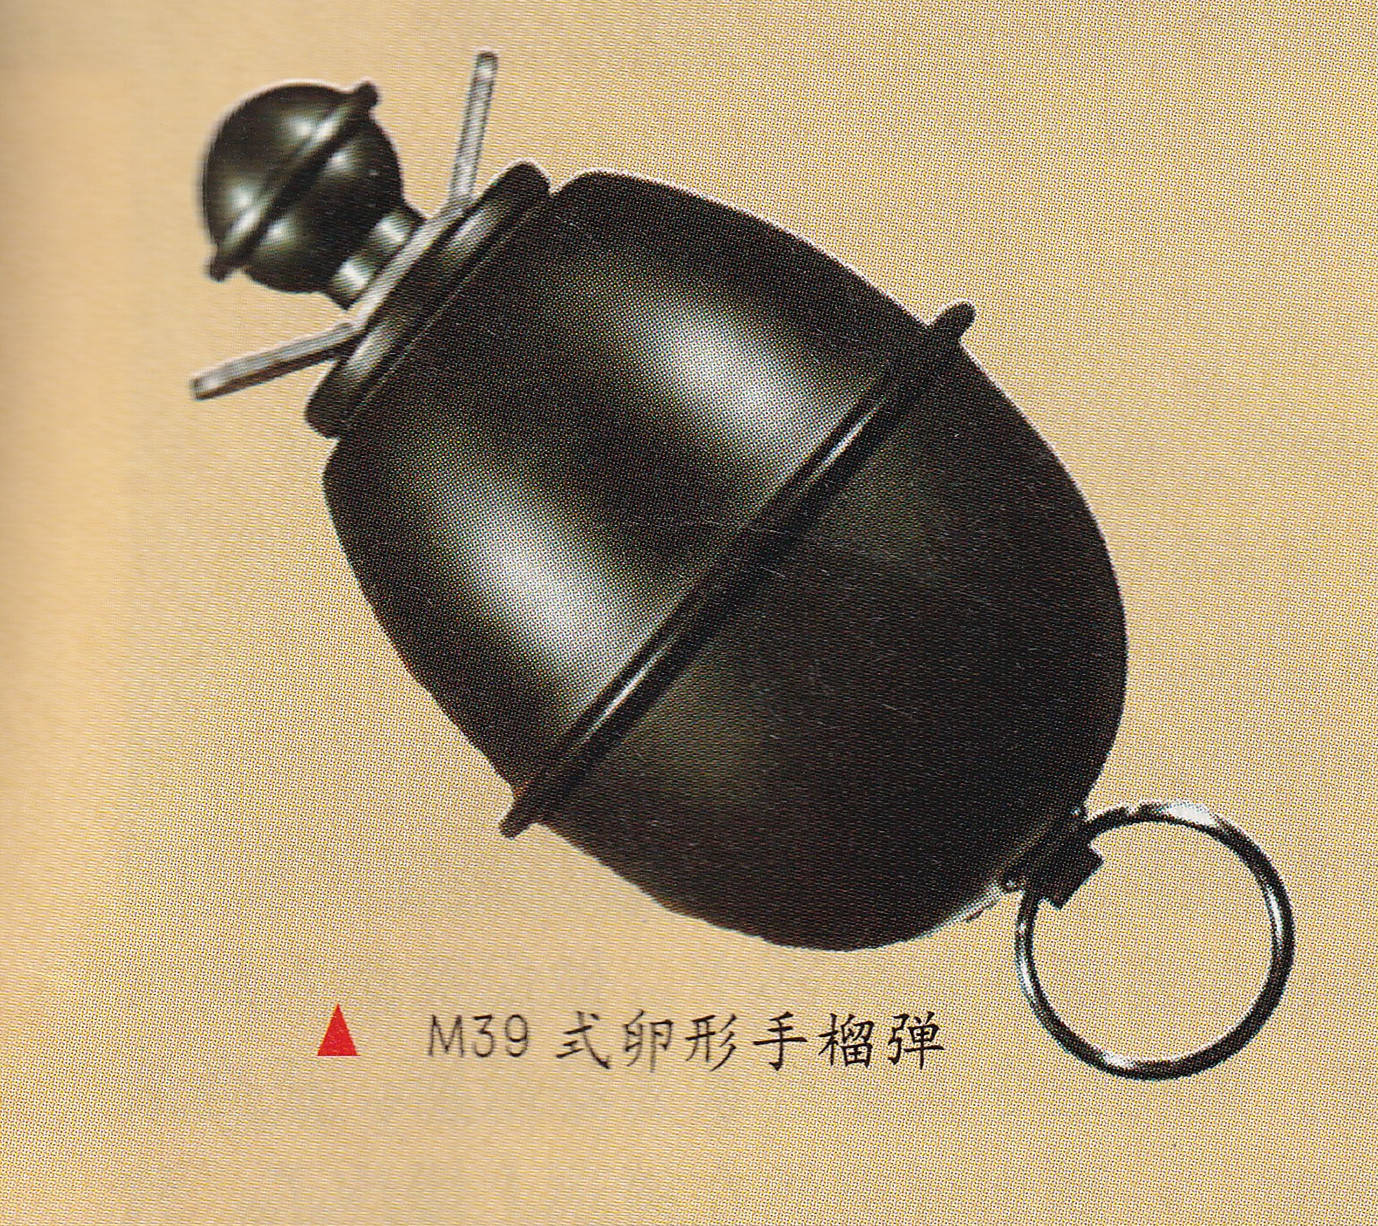 m39式手榴弹弹体内填充tnt炸药,使用和m24手榴弹相同的bz.24/39或bz.